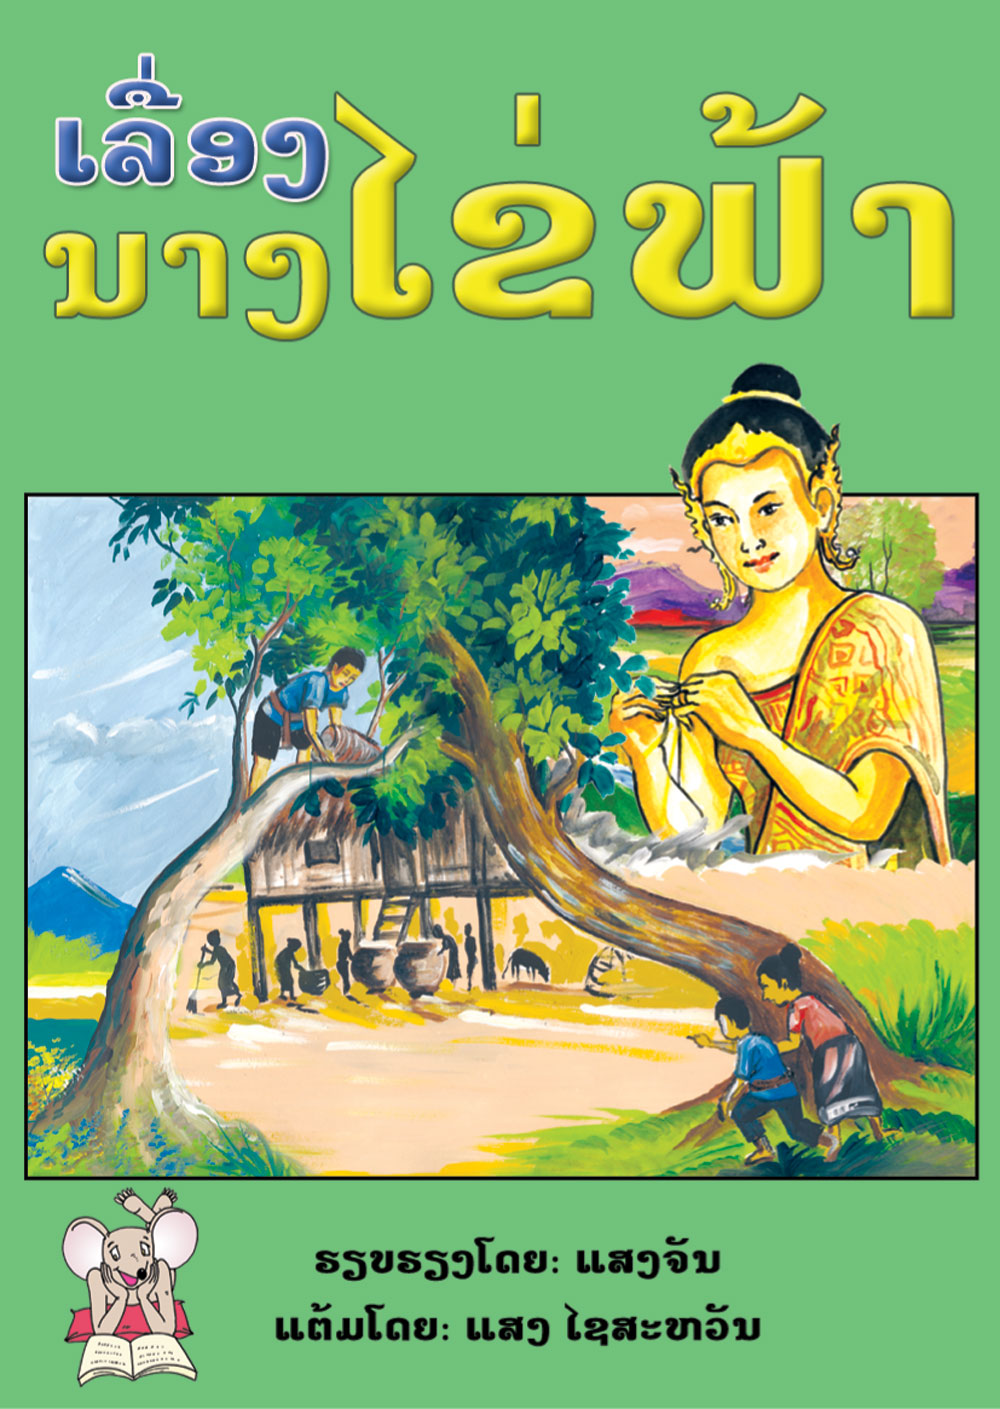 Nang Kaifa large book cover, published in Lao language